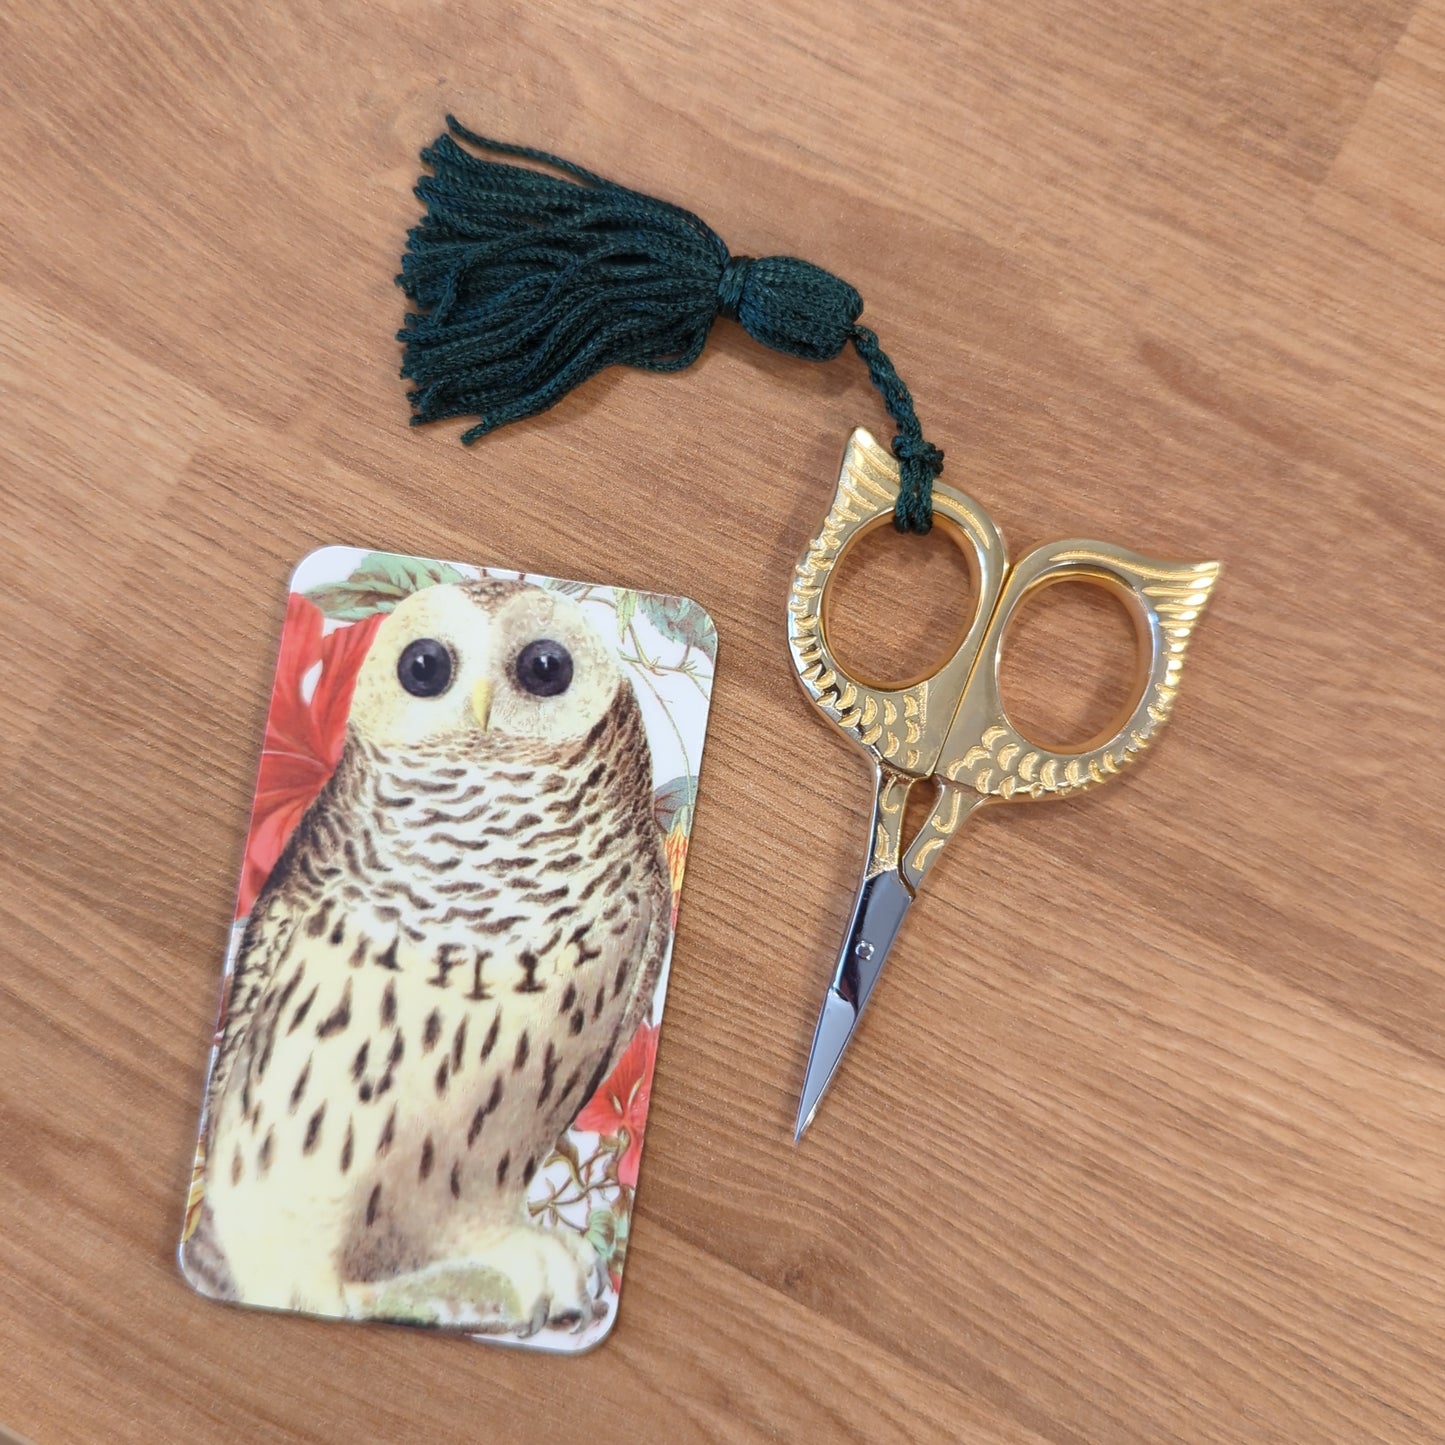 Owl embroidery scissors